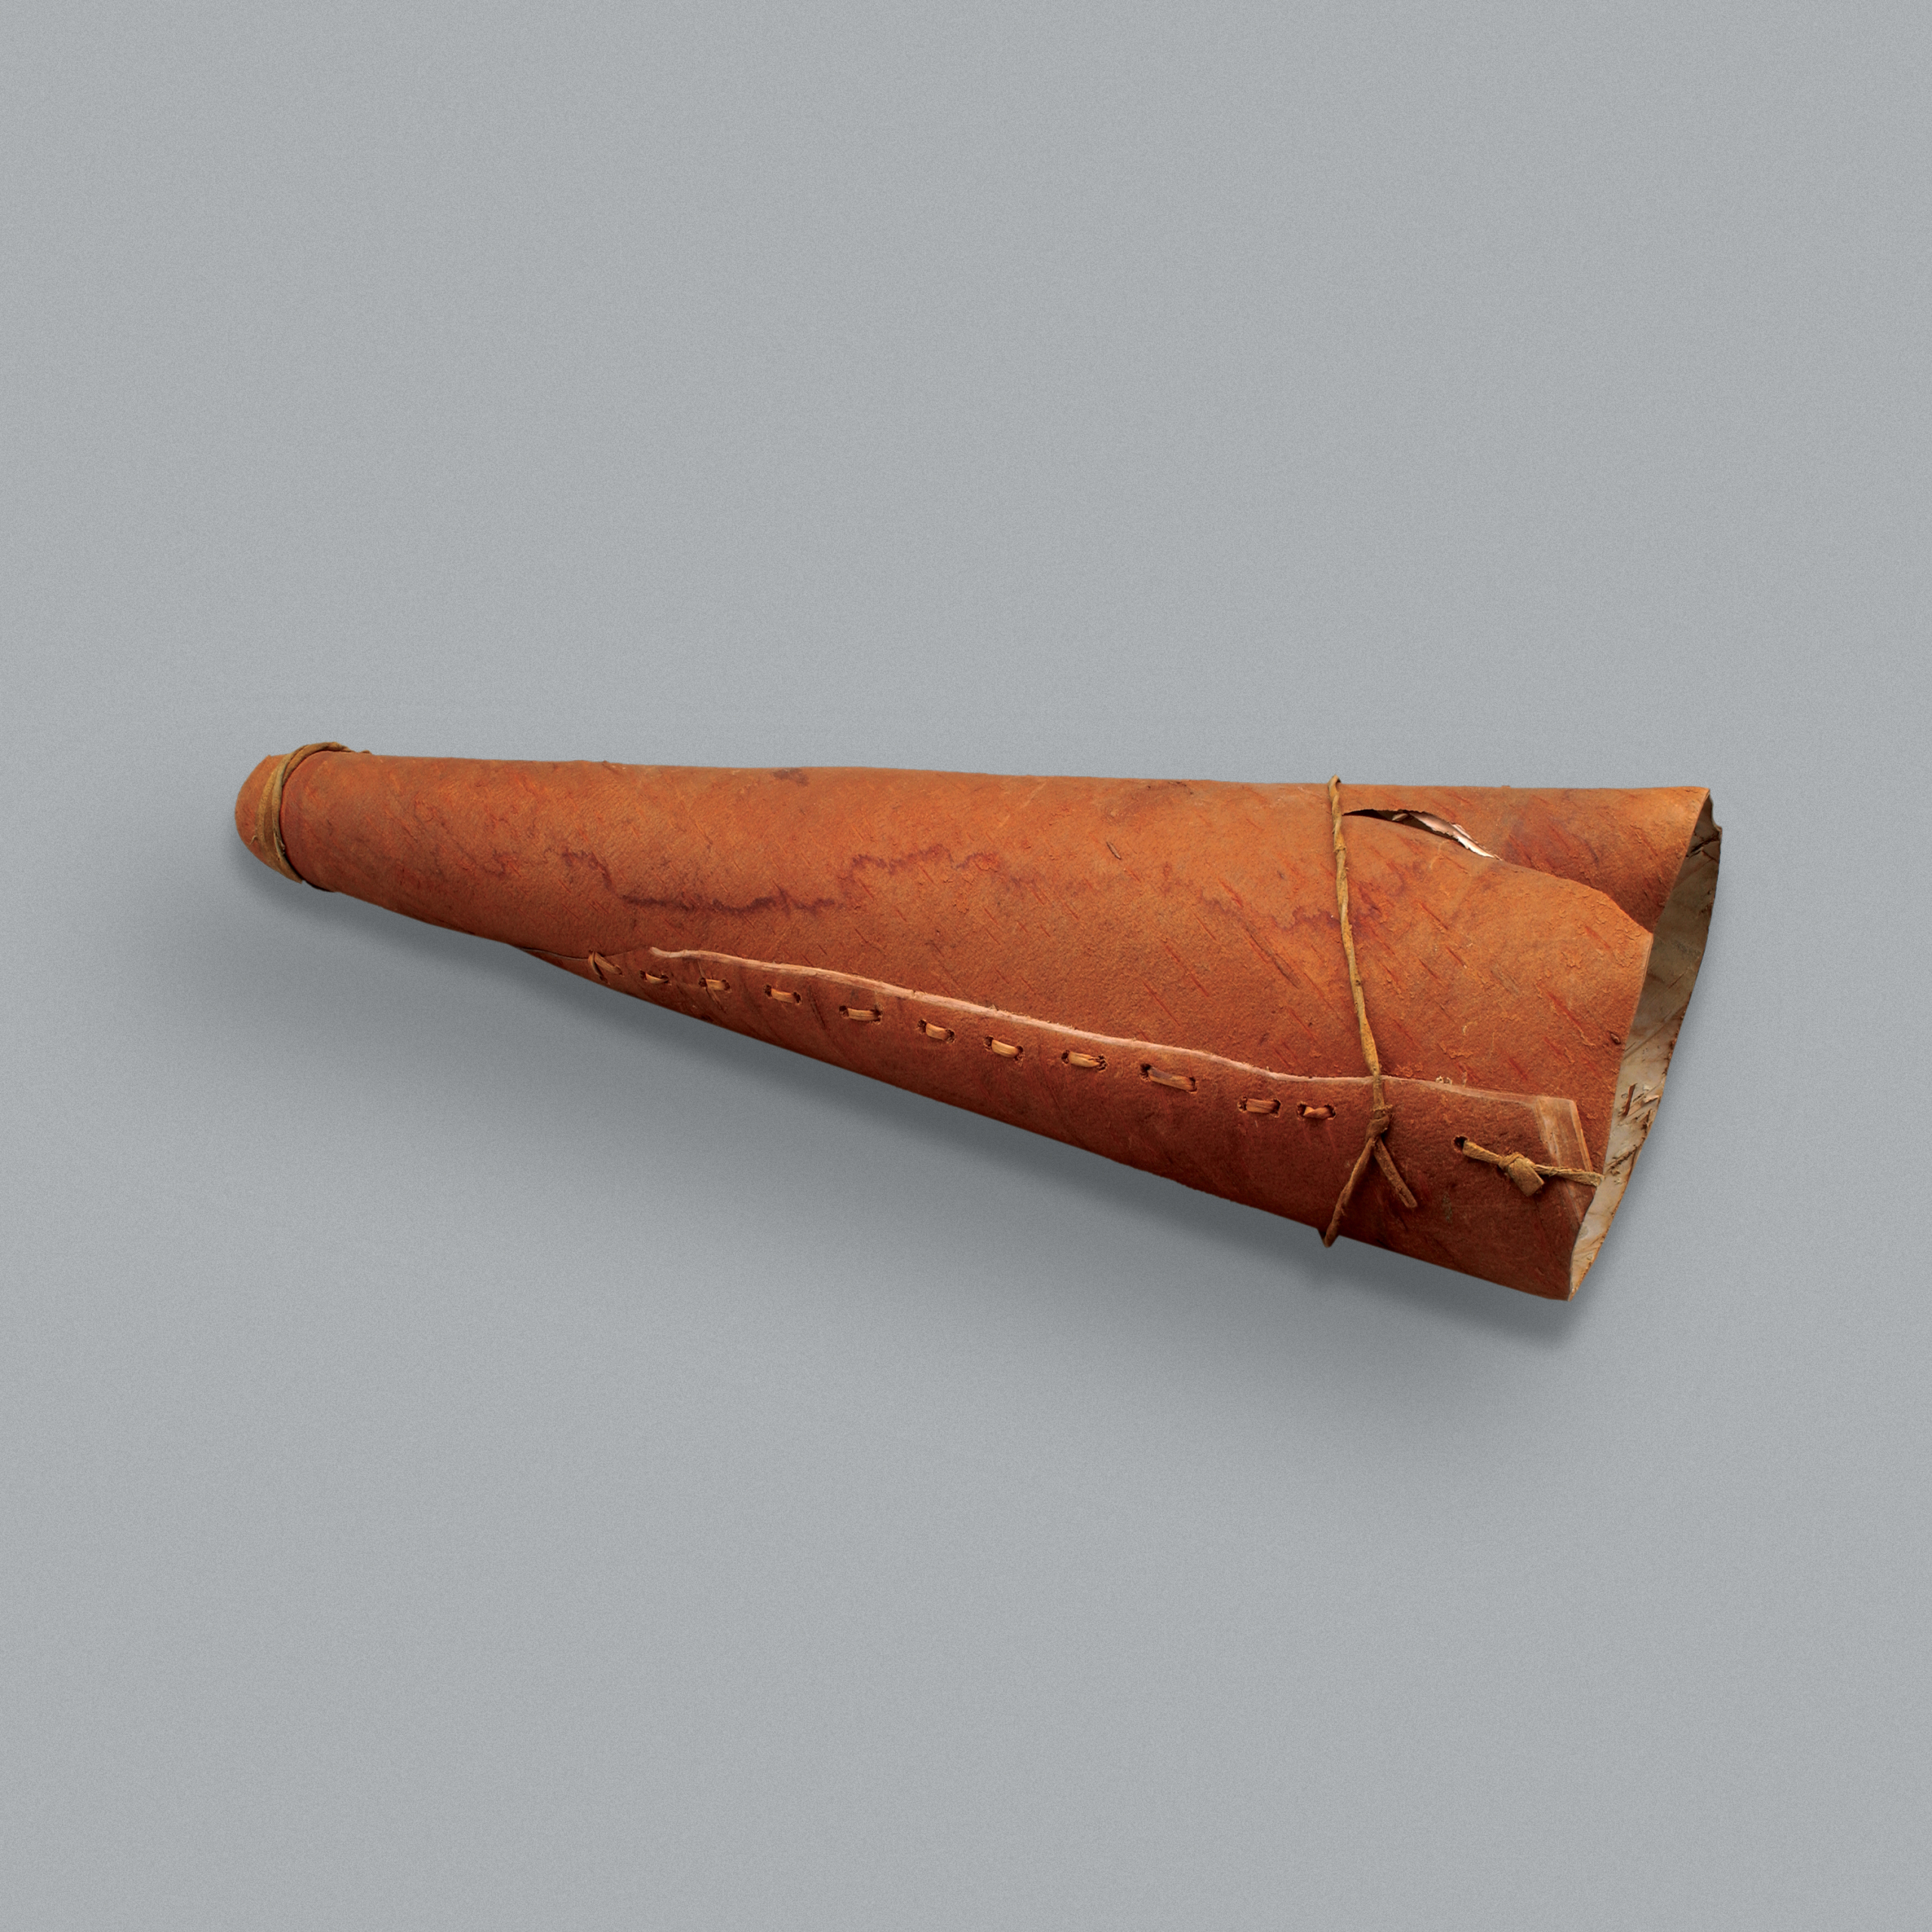 Cone-shaped object made of birchbark